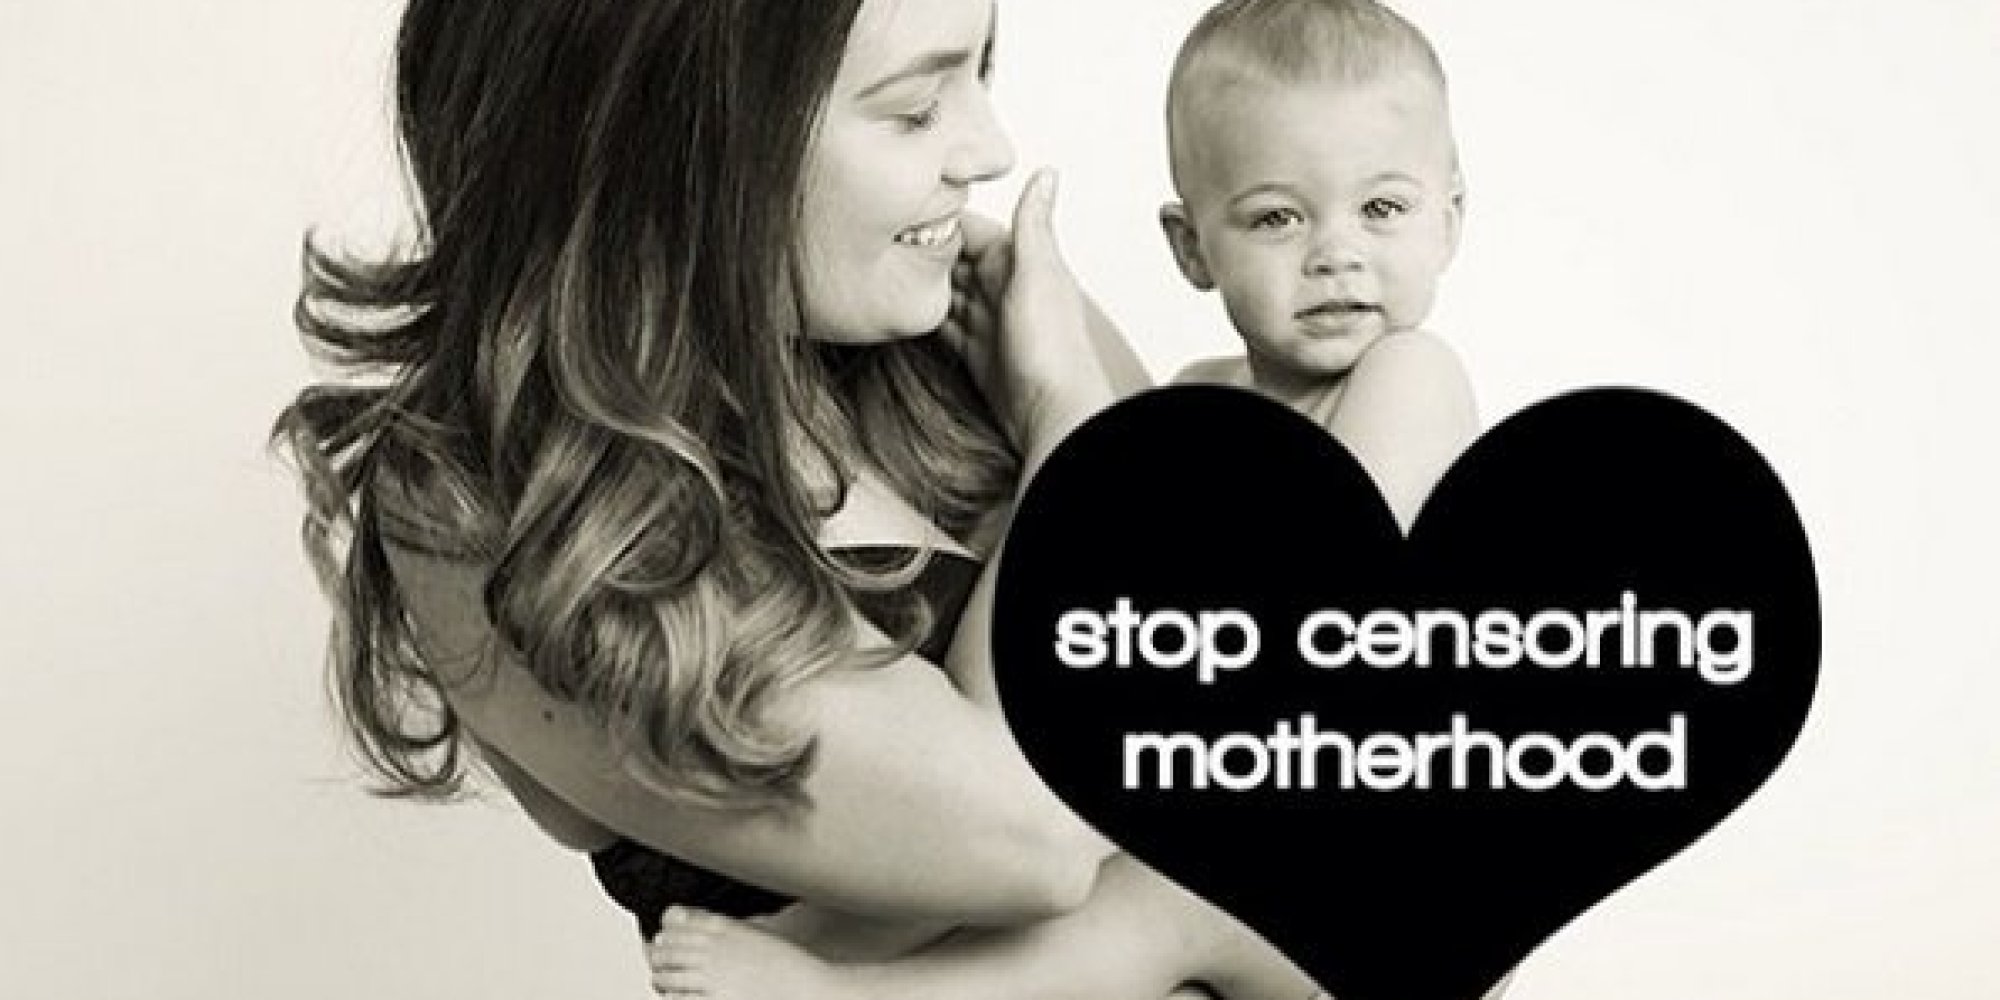 Stop Censoring Motherhood Movement Takes Aim At Facebook 